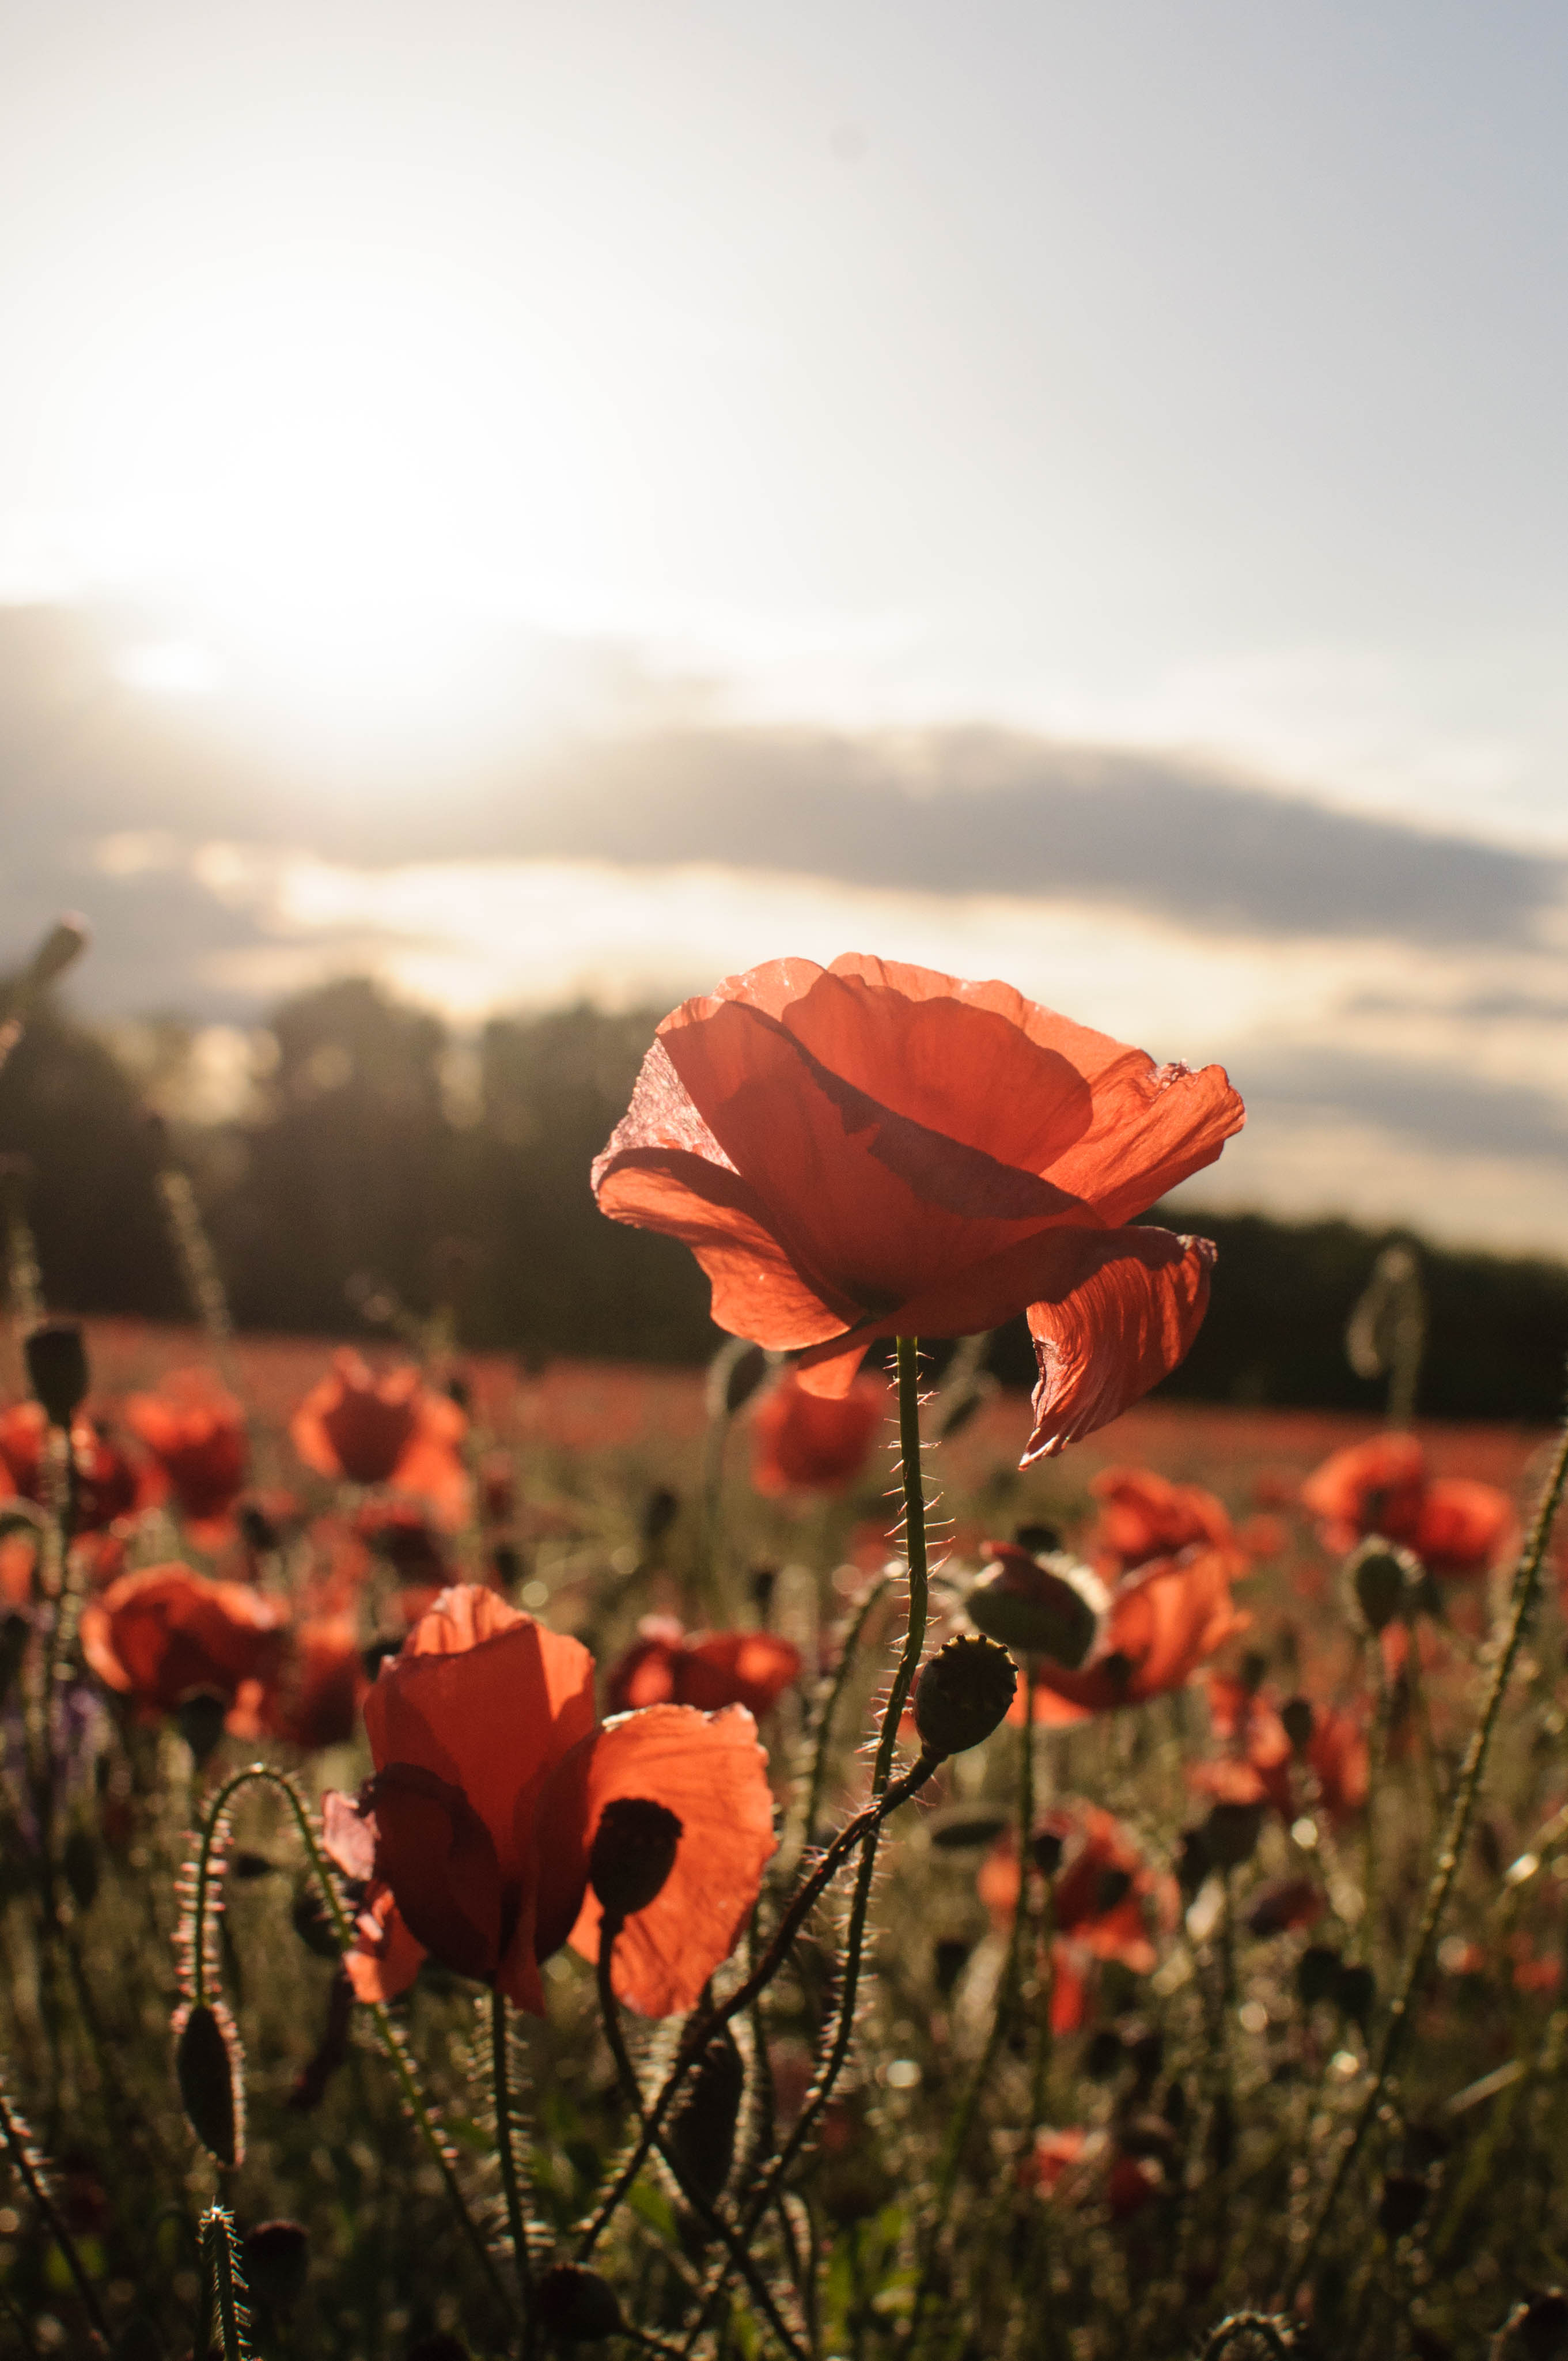 flowers, poppies, red, field, sunlight